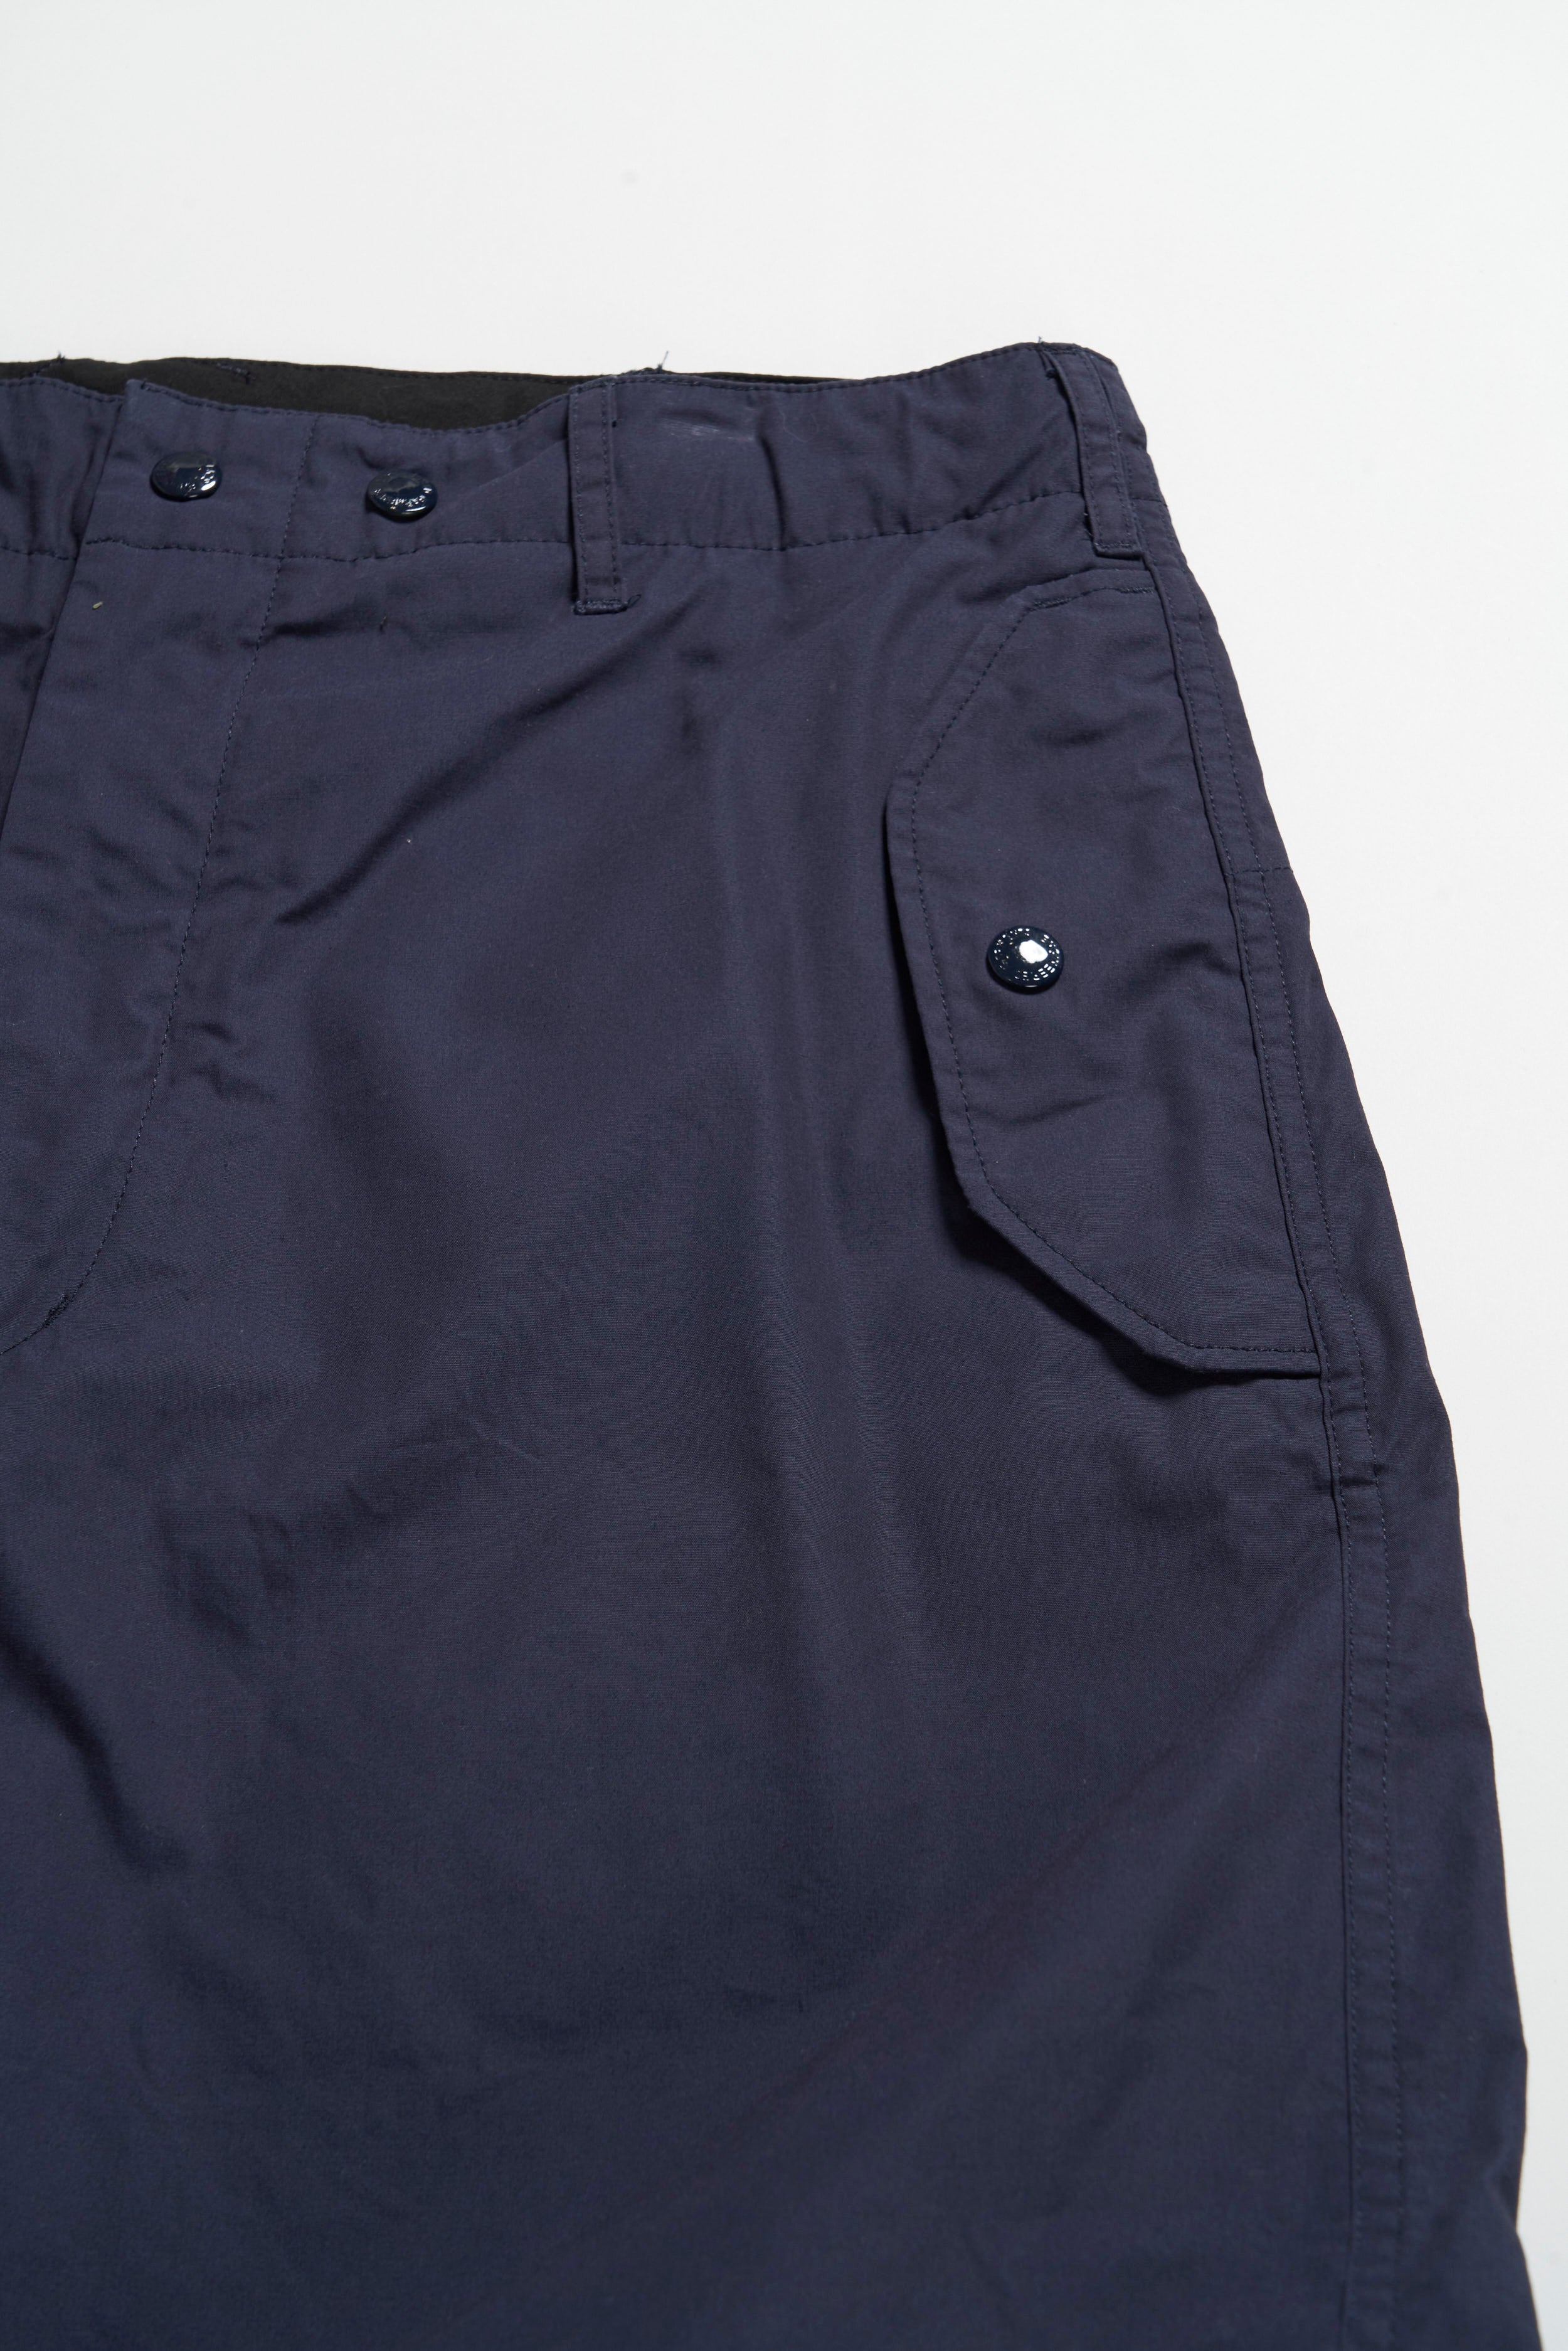 Engineered Garments Over Pant - Navy Cotton Duracloth Poplin